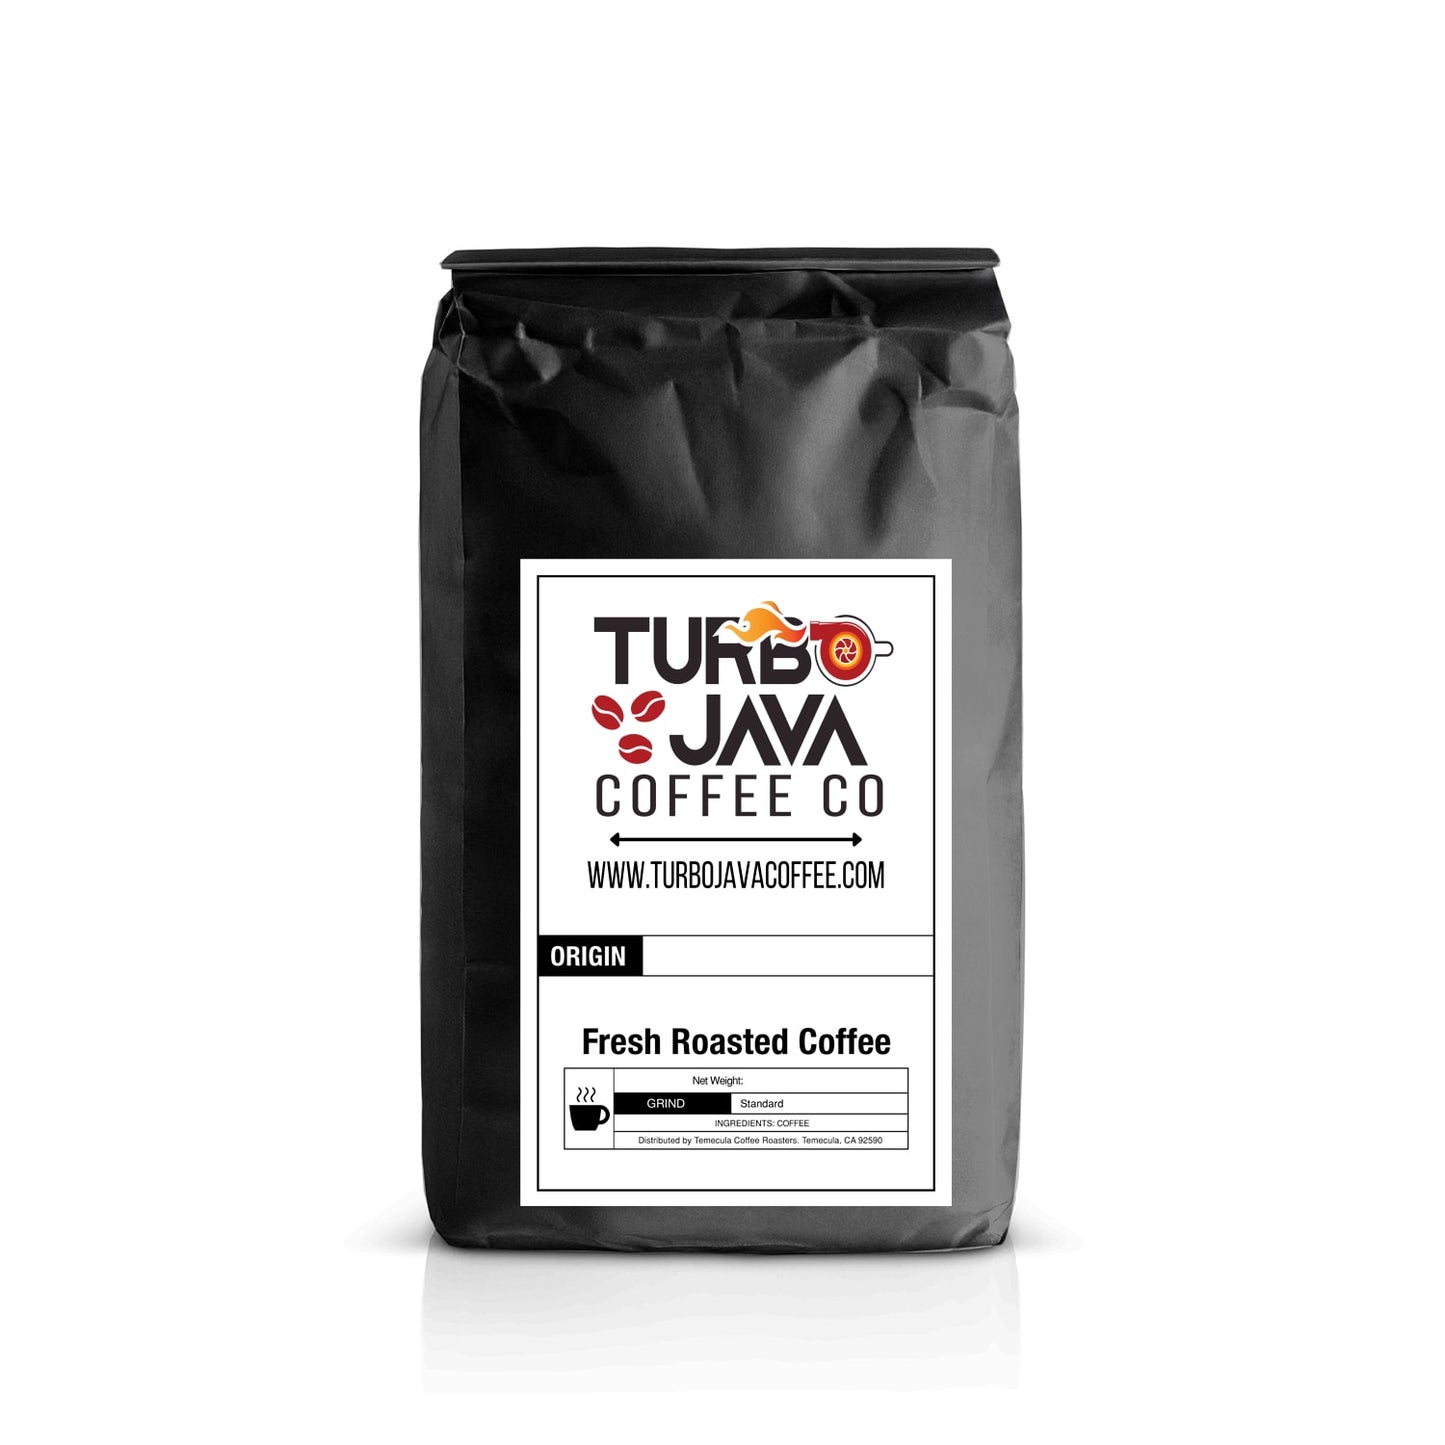 Turbo Java Coffee Co. African Espresso Coffee 12 oz / Standard,12 oz / Coarse,12 oz / Espresso,12 oz / Whole Bean,1 lb / Standard,1 lb / Coarse,1 lb / Espresso,1 lb / Whole Bean,2 lb / Standard,2 lb / Coarse,2 lb / Espresso,2 lb / Whole Bean,5 lb / Standard,5 lb / Coarse,5 lb / Espresso,5 lb / Whole Bean,12 lb / Standard,12 lb / Coarse,12 lb / Espresso,12 lb / Whole Bean